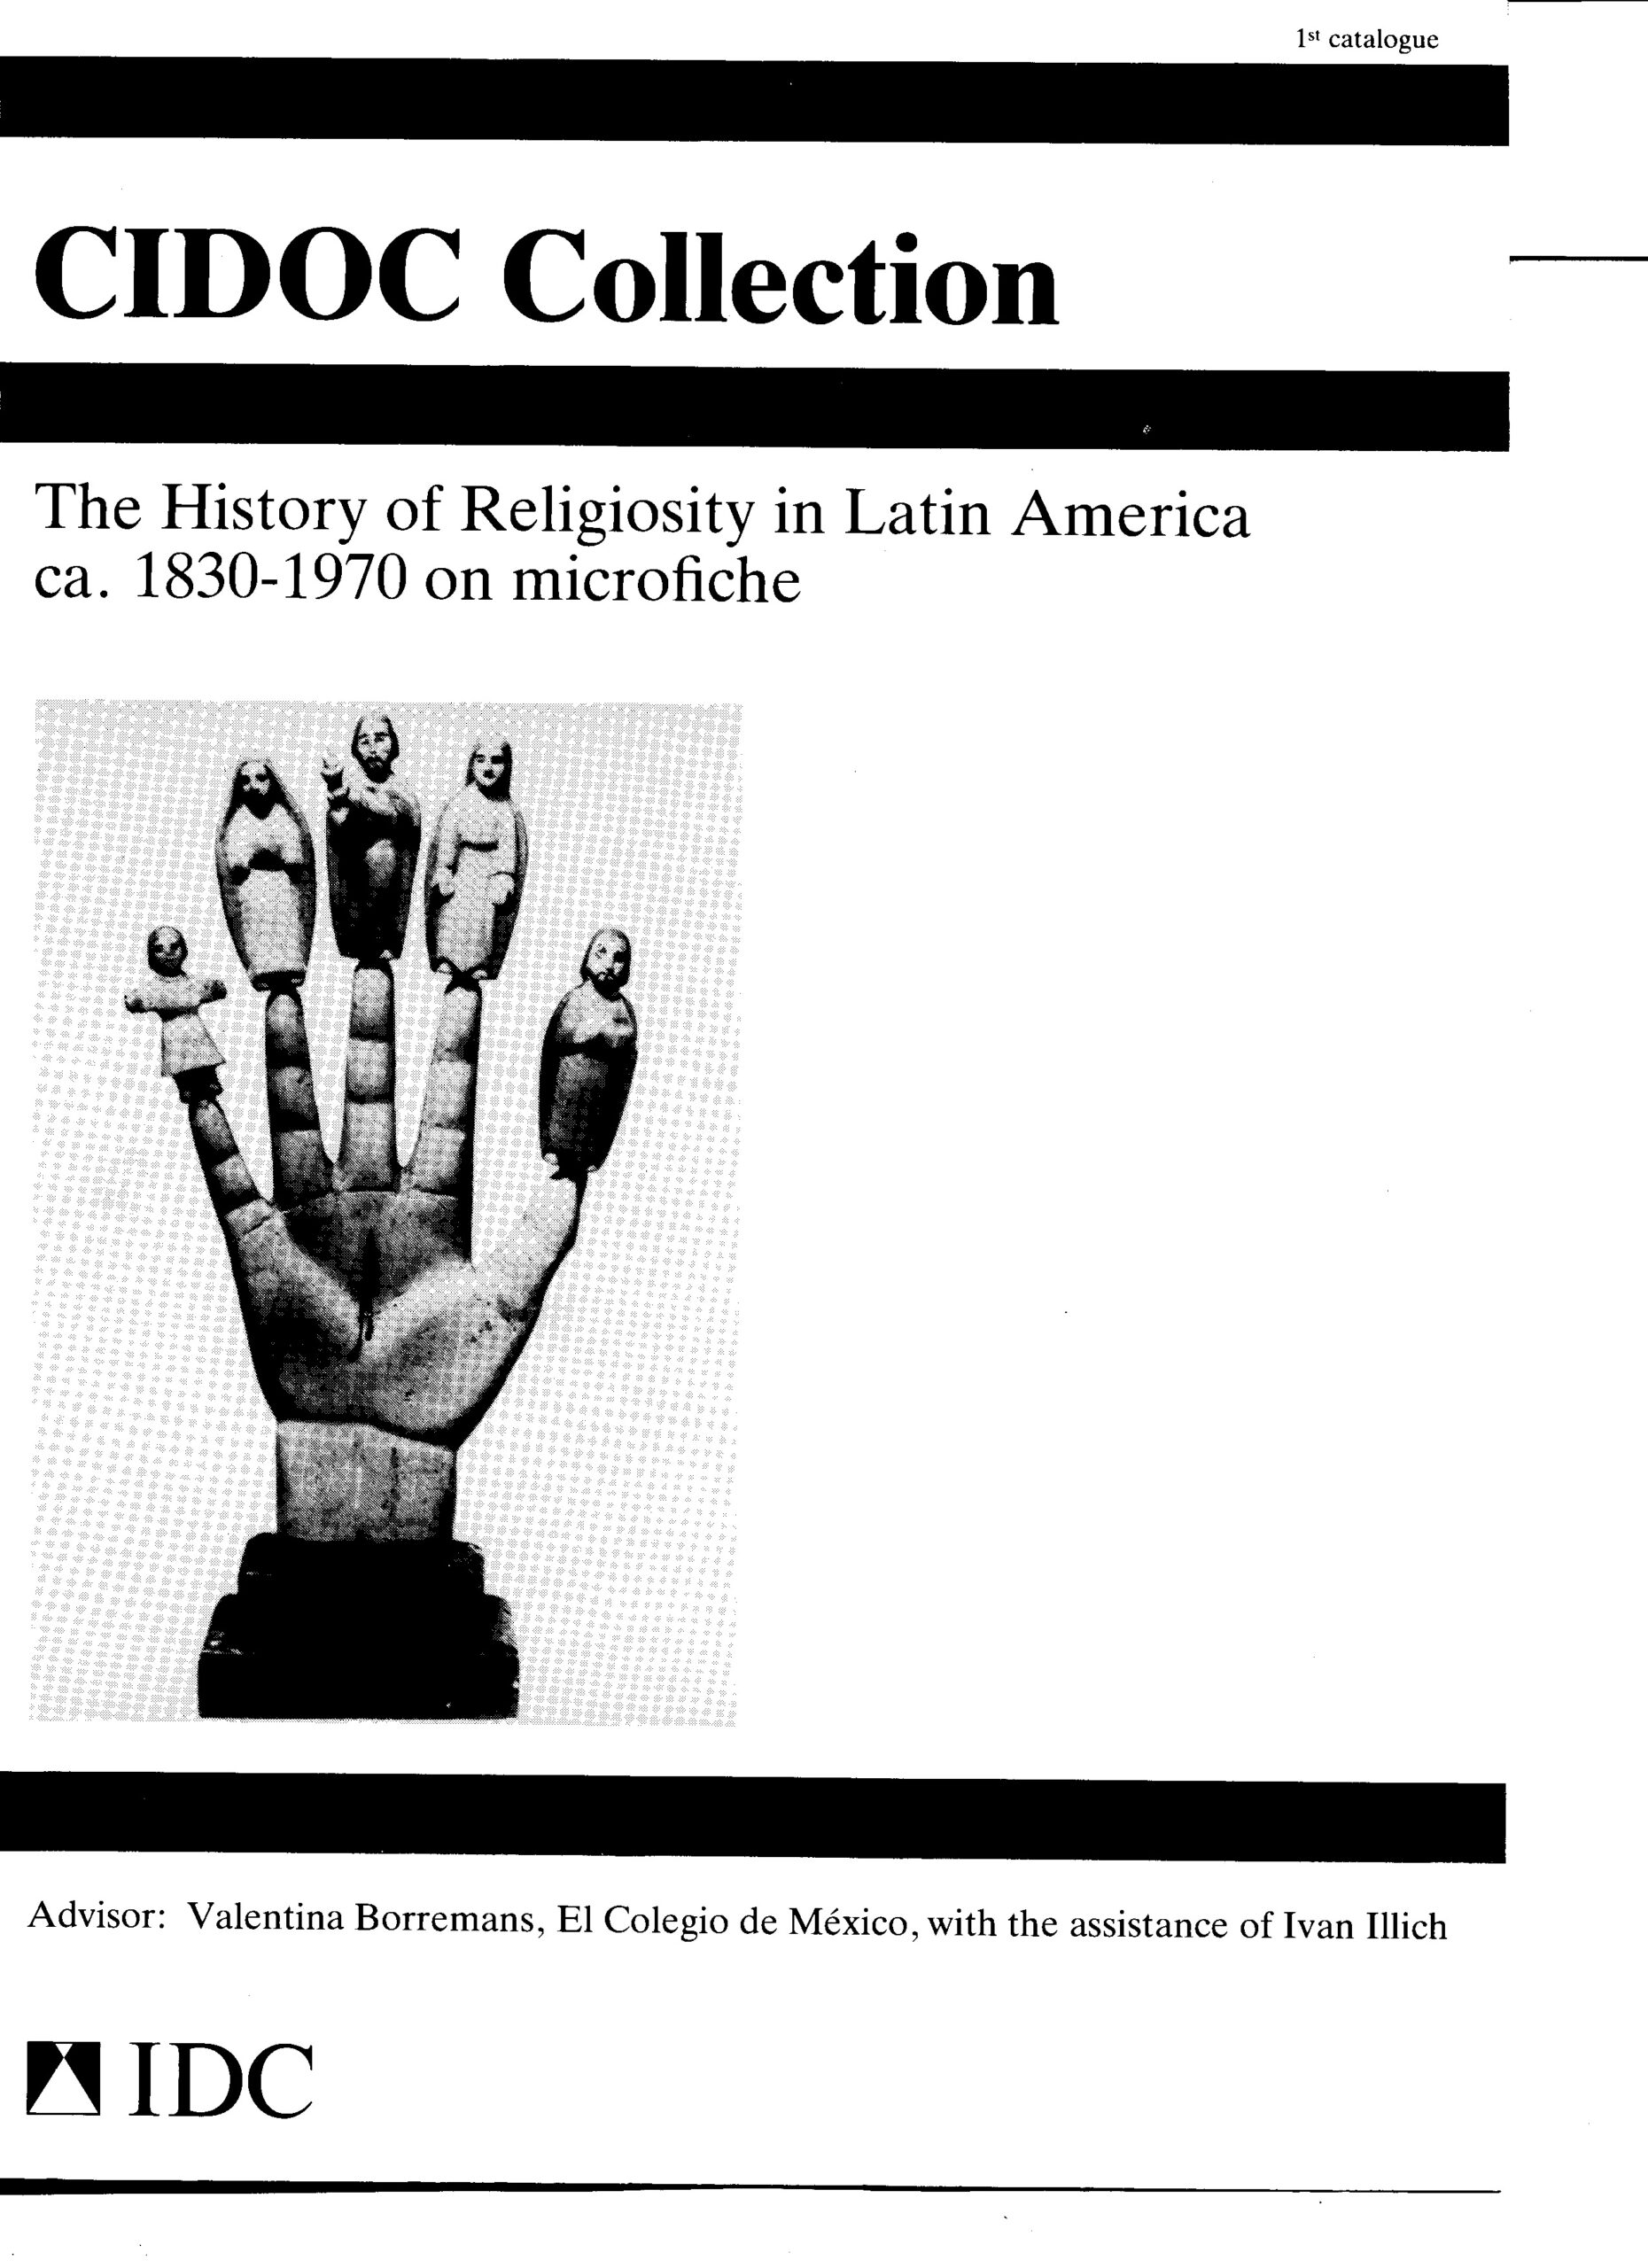 CIDOC History of Religiosity in Latin America